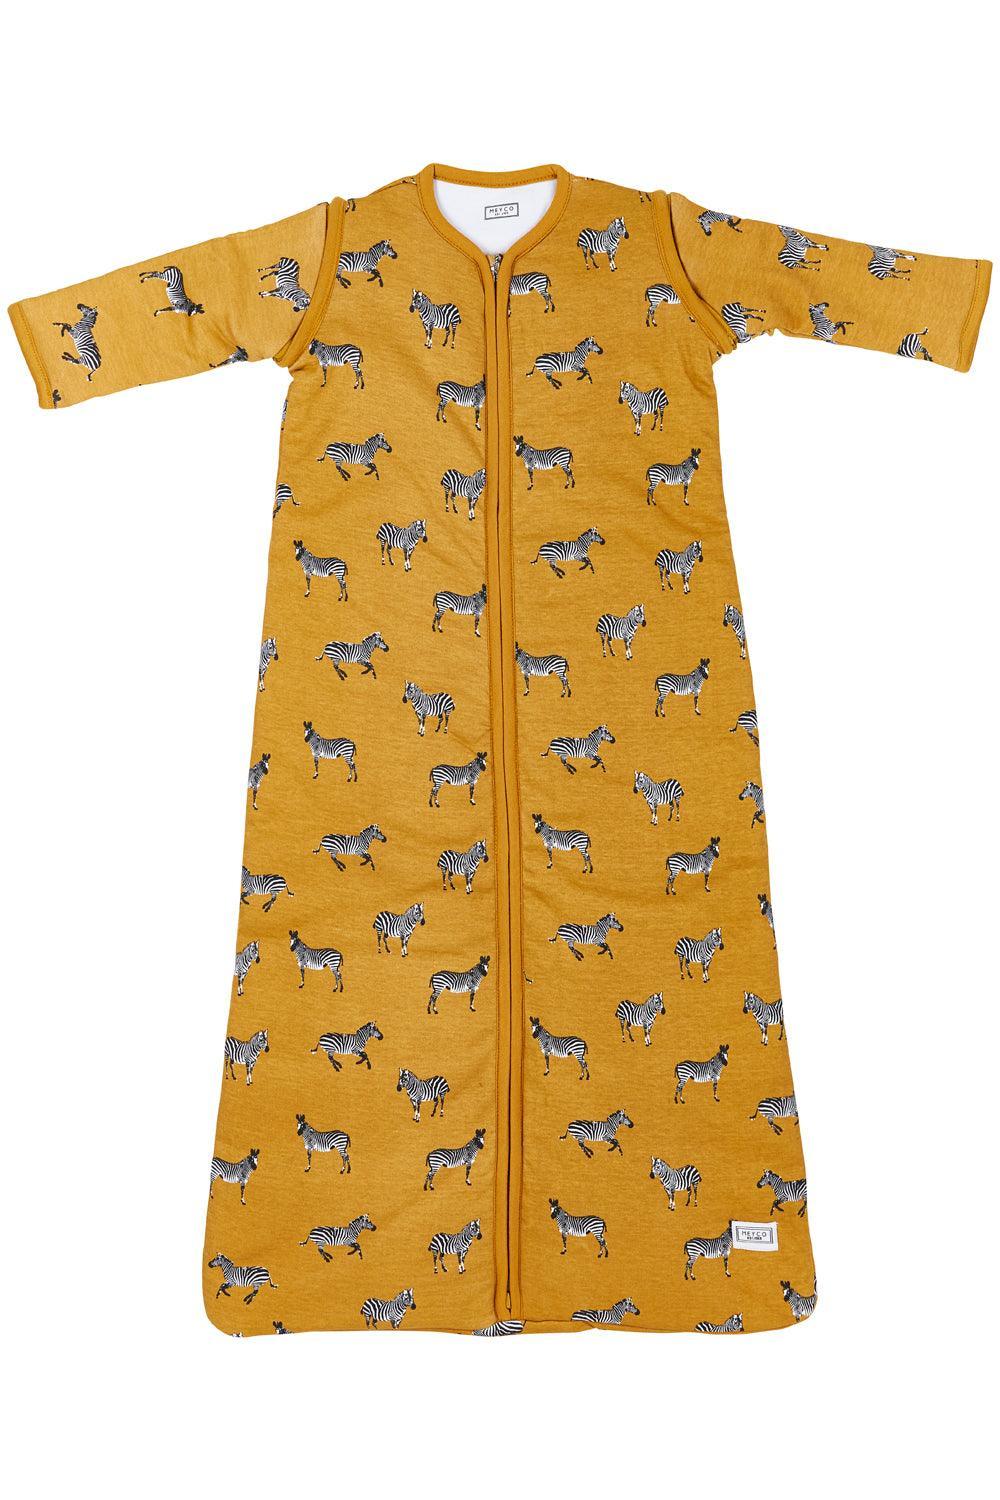 Meyco - Baby Sleeping Bag, Detachable Sleeve Lined Zebra Animal - Honey Gold 90cm - Mari Kali Stores Cyprus